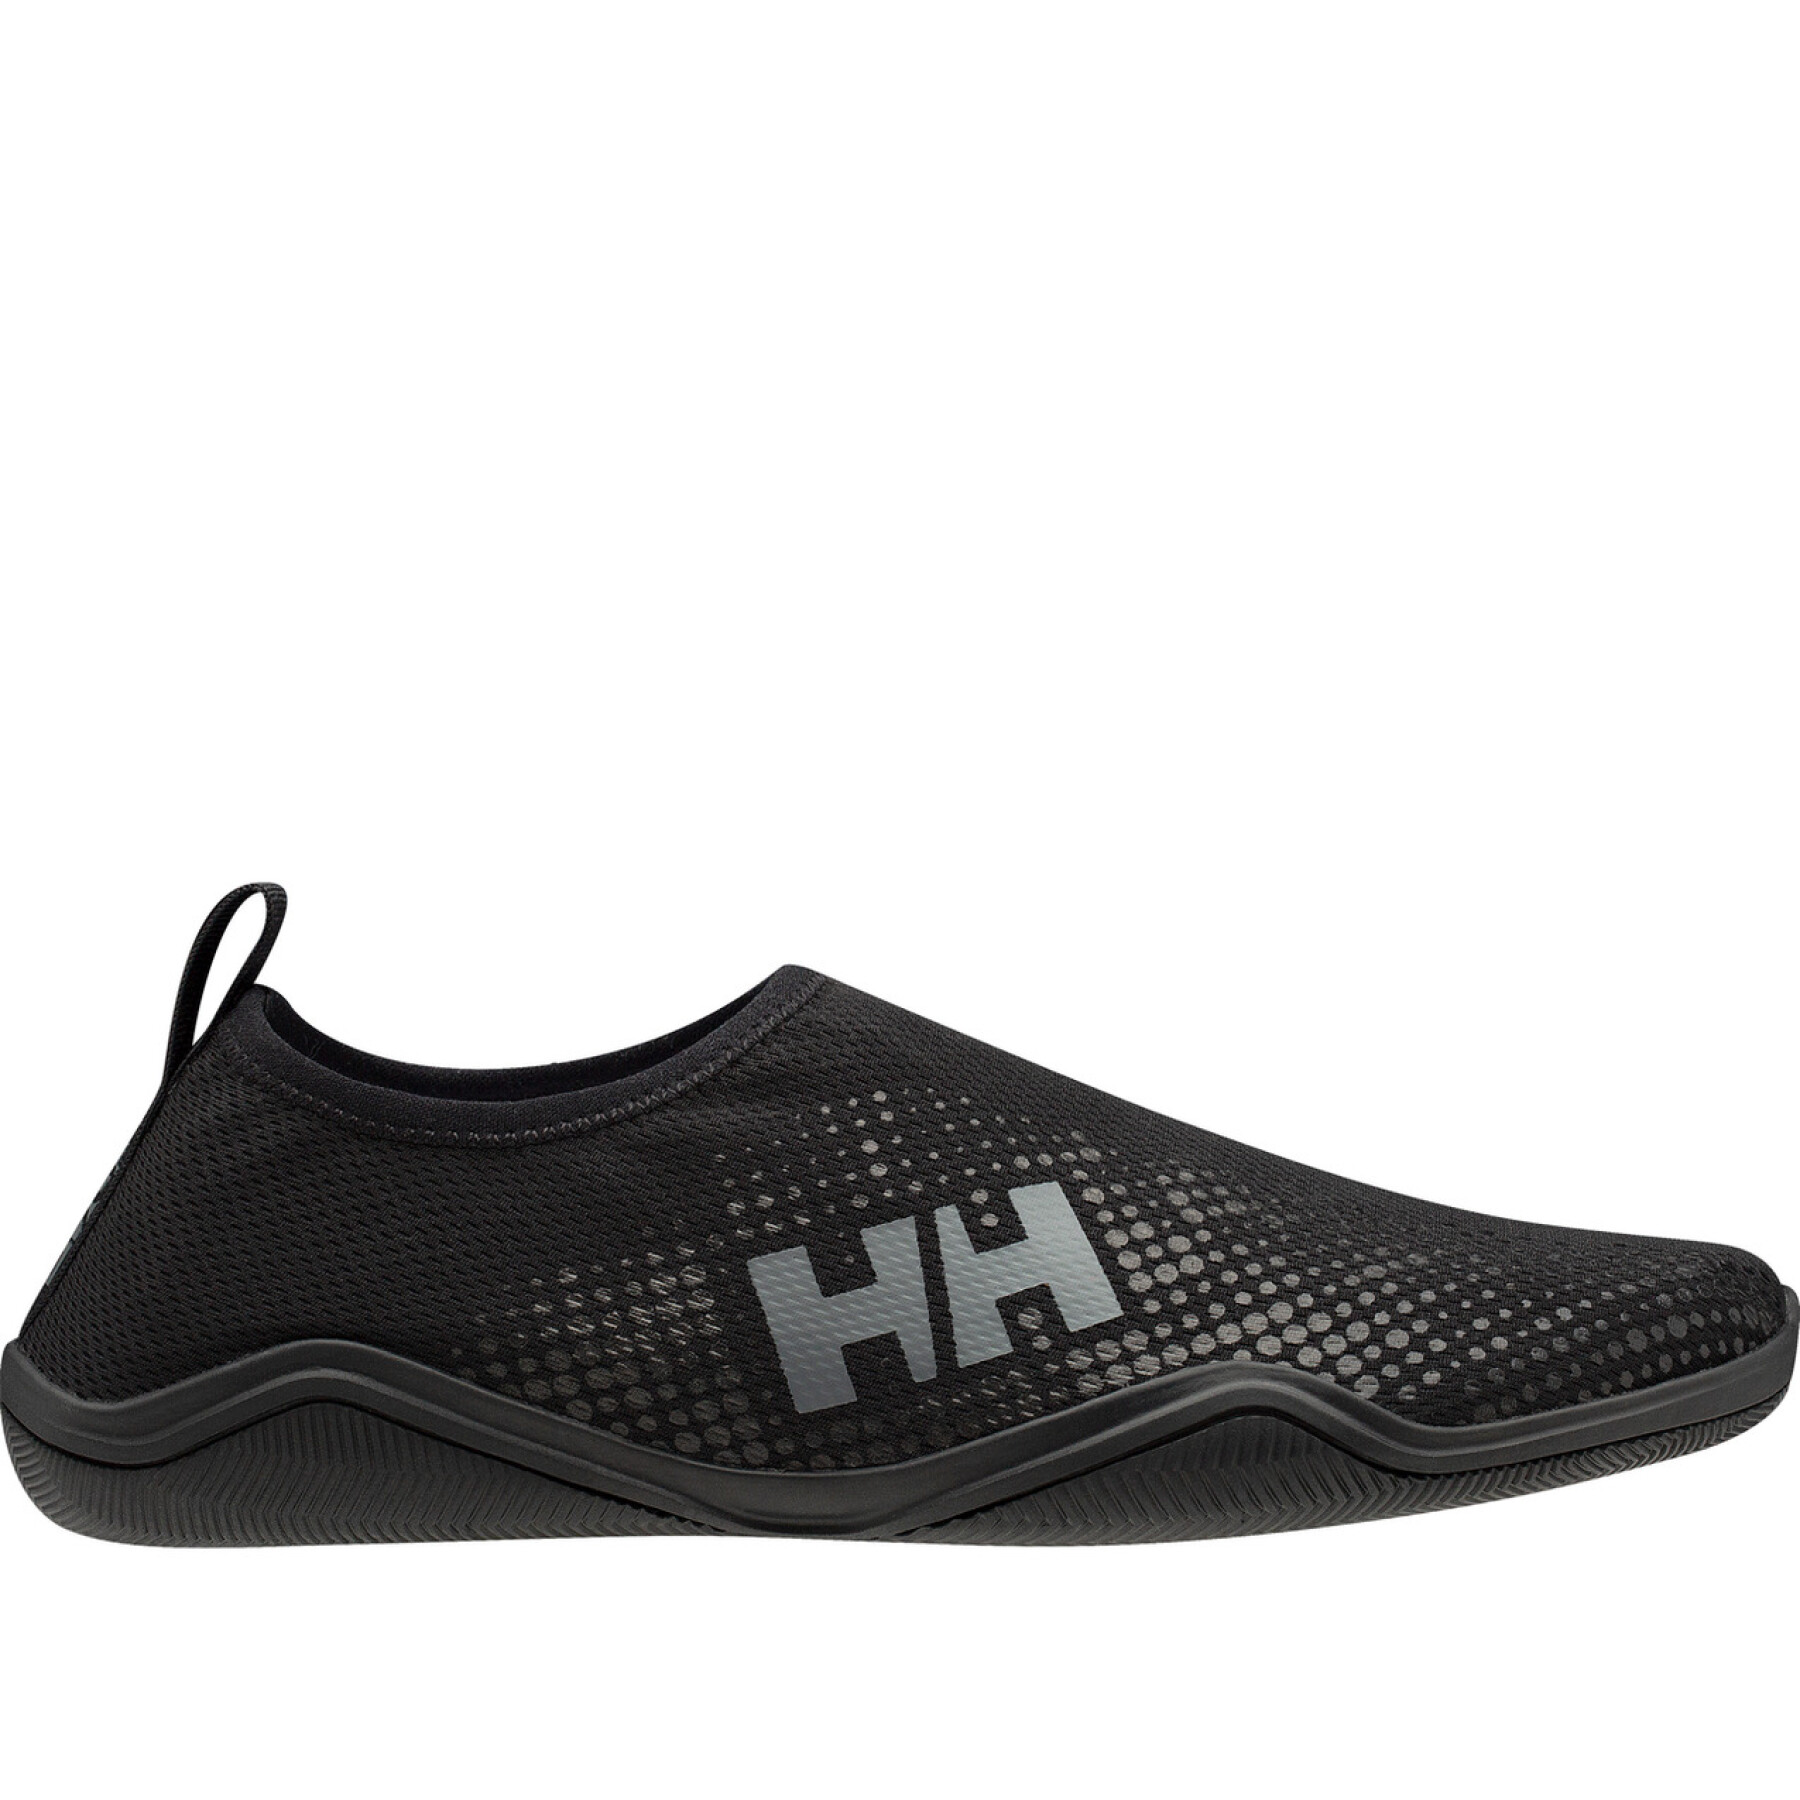 Aquatic shoes Helly Hansen Crest Watermoc